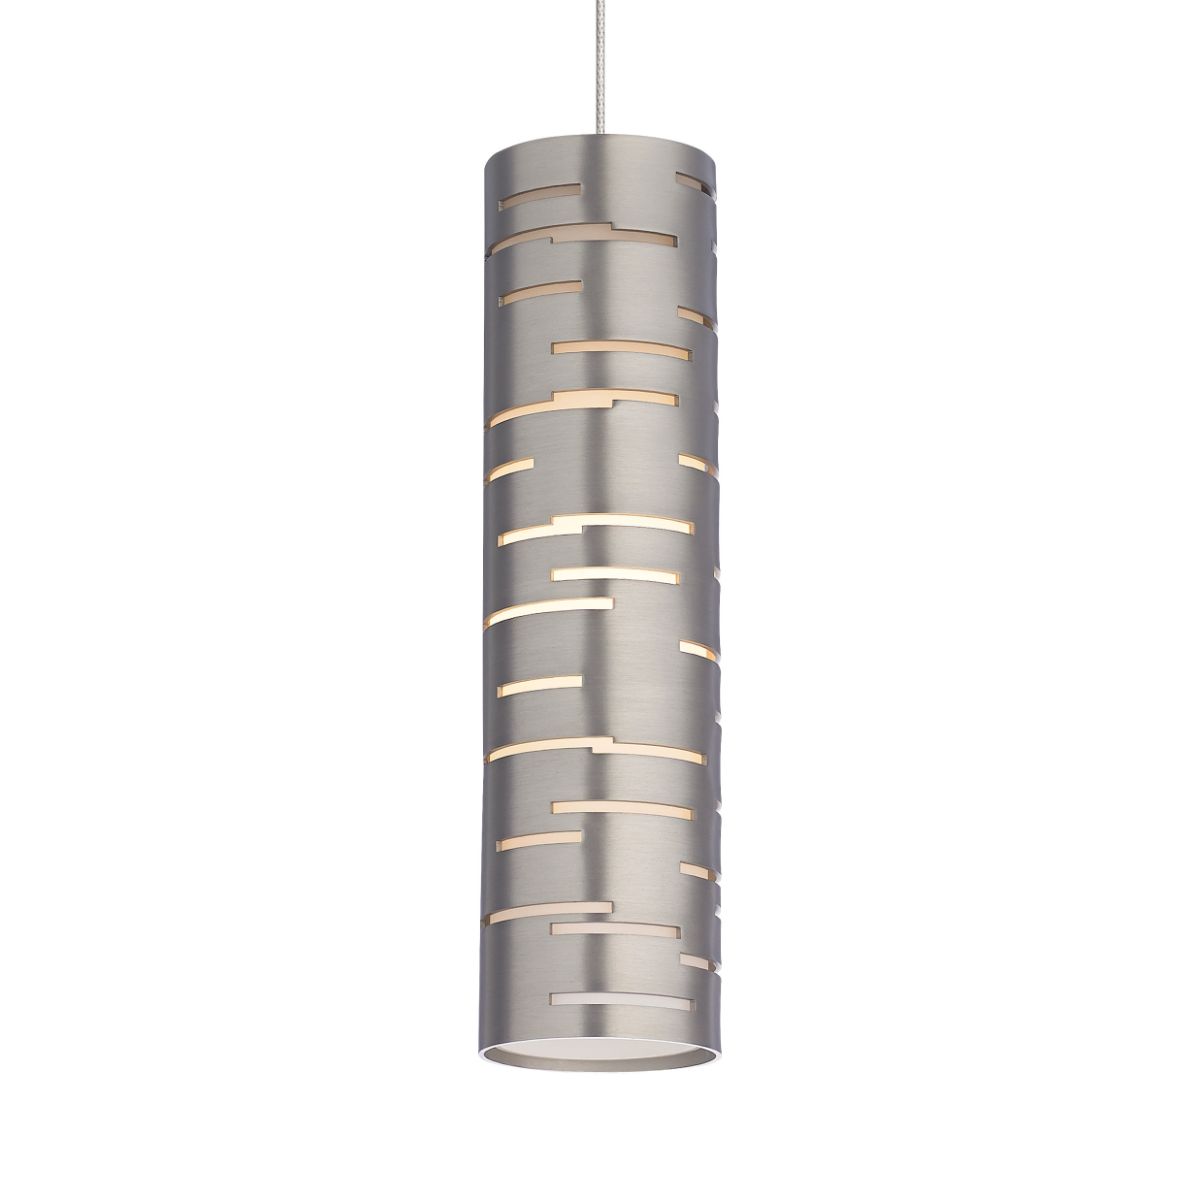 Revel Pendant Light MonoRail Nickel|Bronze Finish